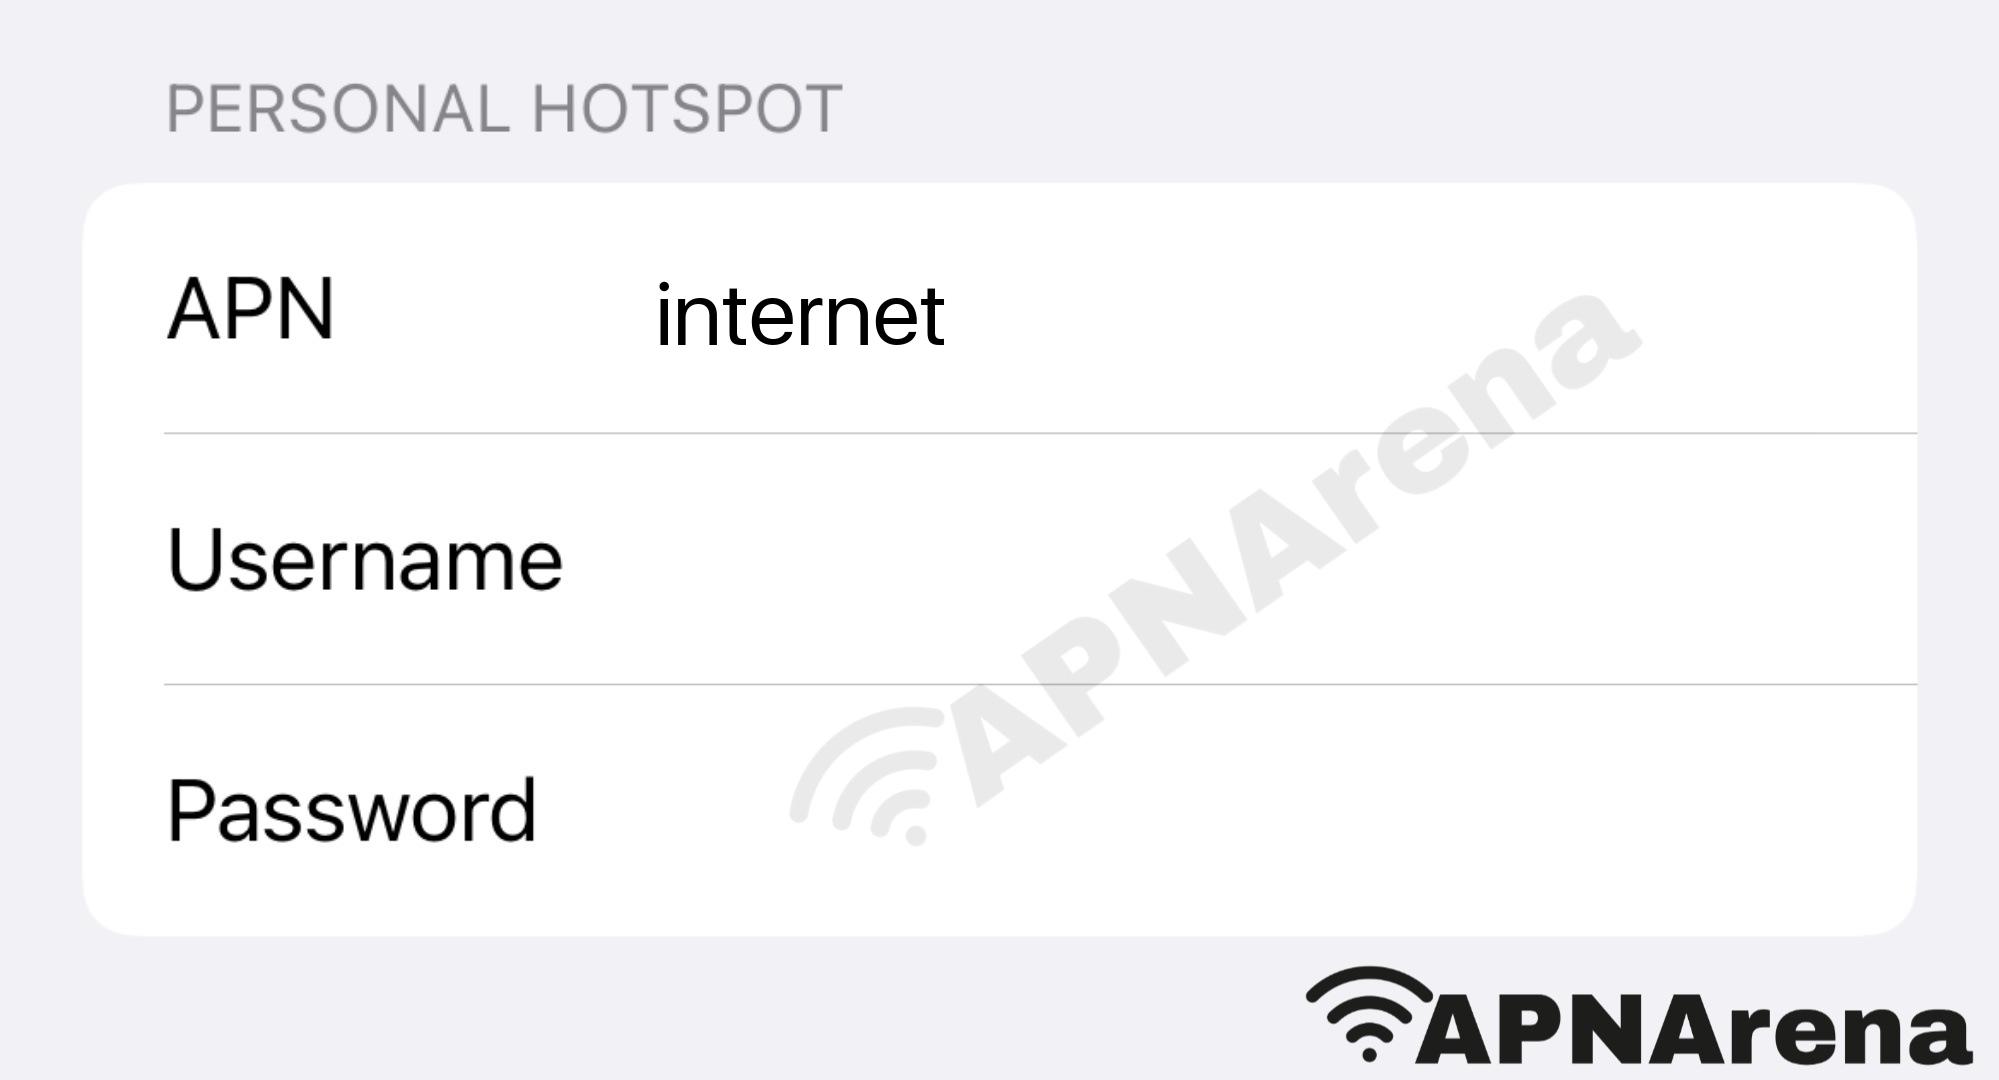 Vodafone Qatar Personal Hotspot Settings for iPhone